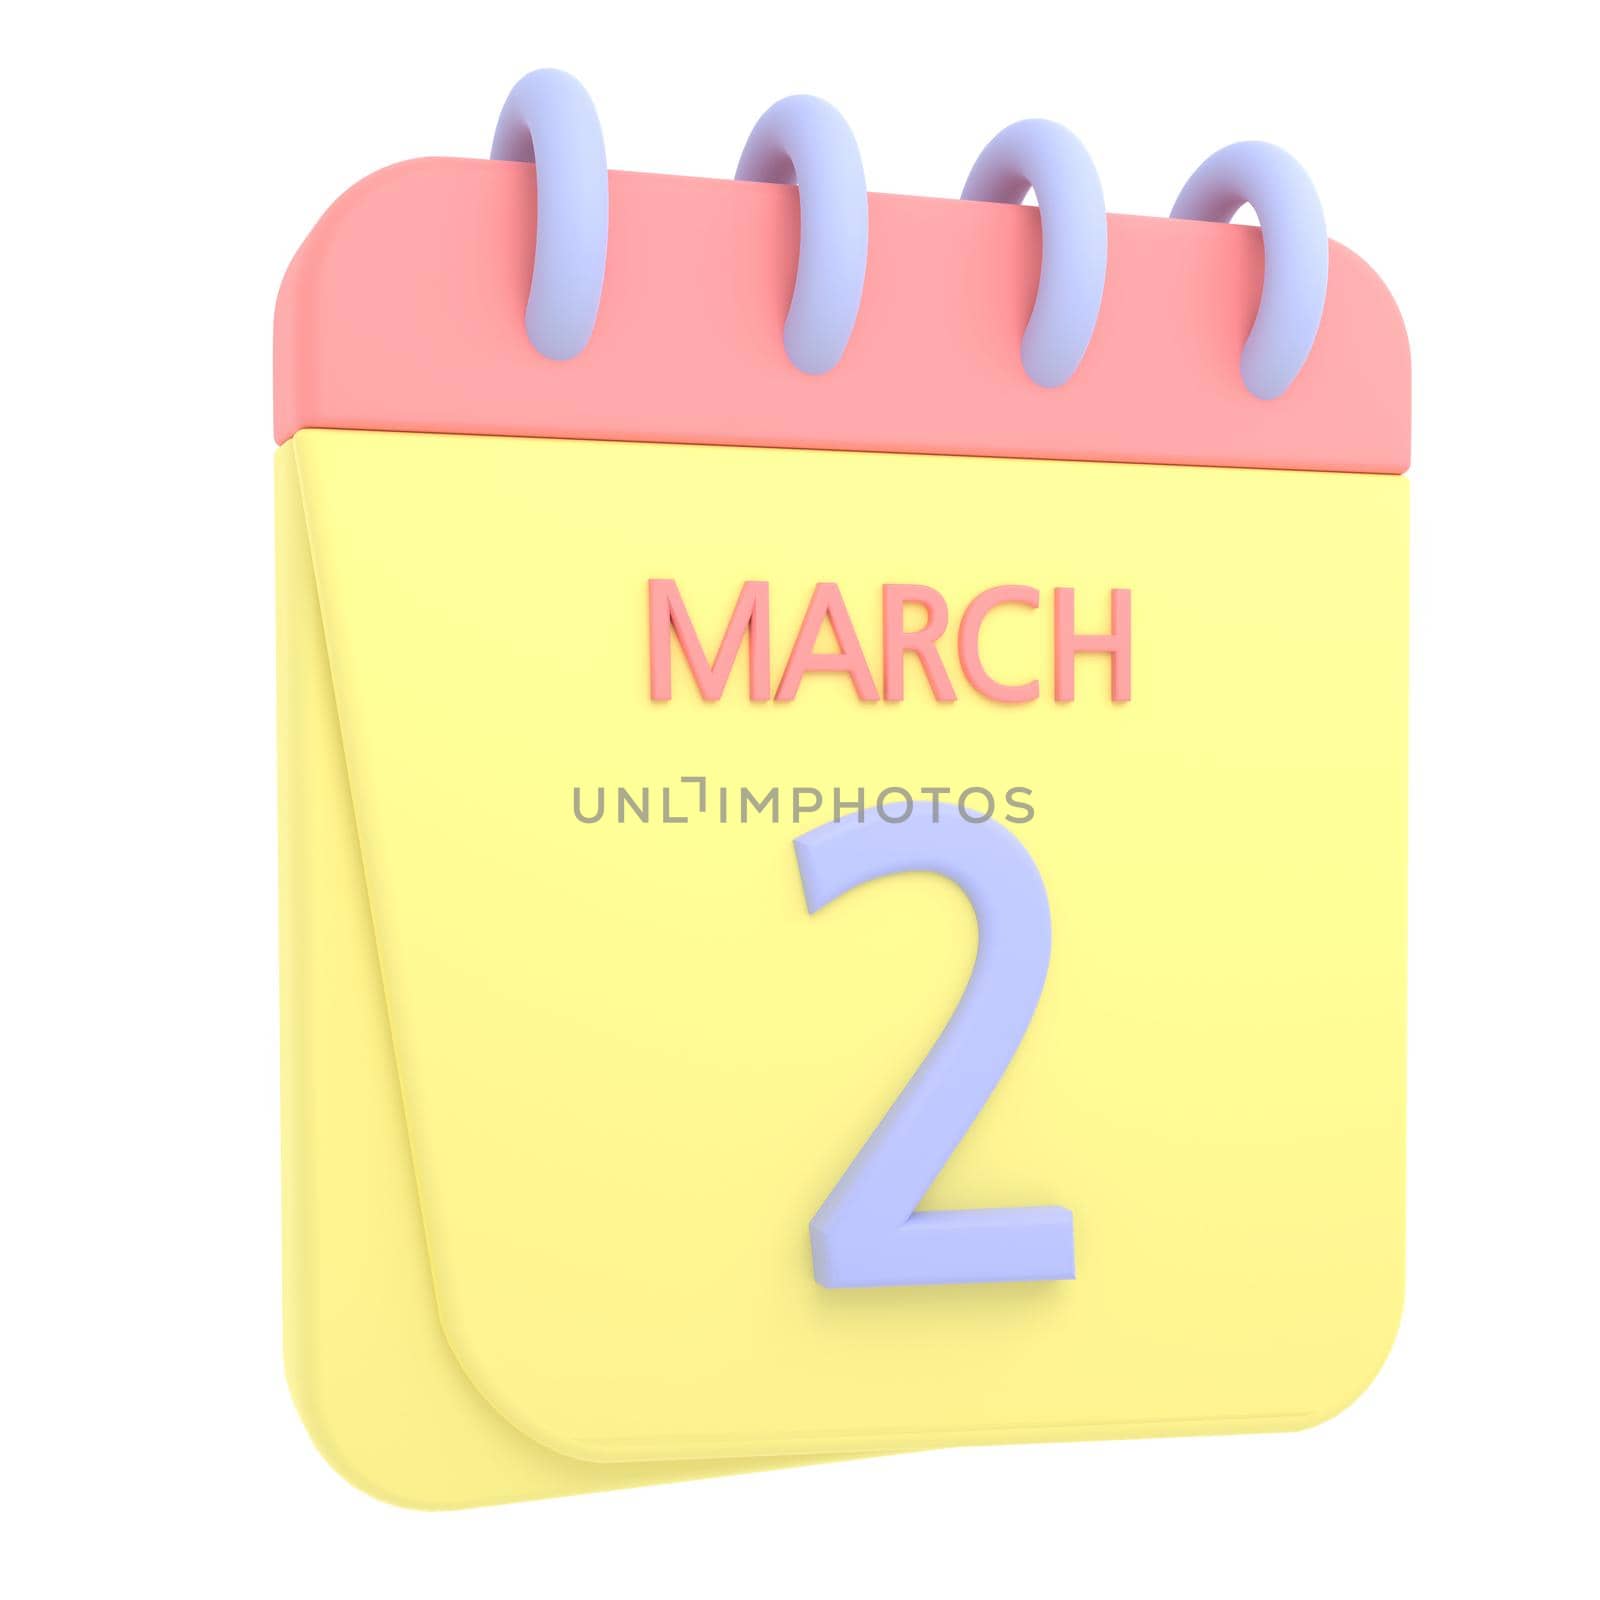 2nd March 3D calendar icon by AnnaMarin